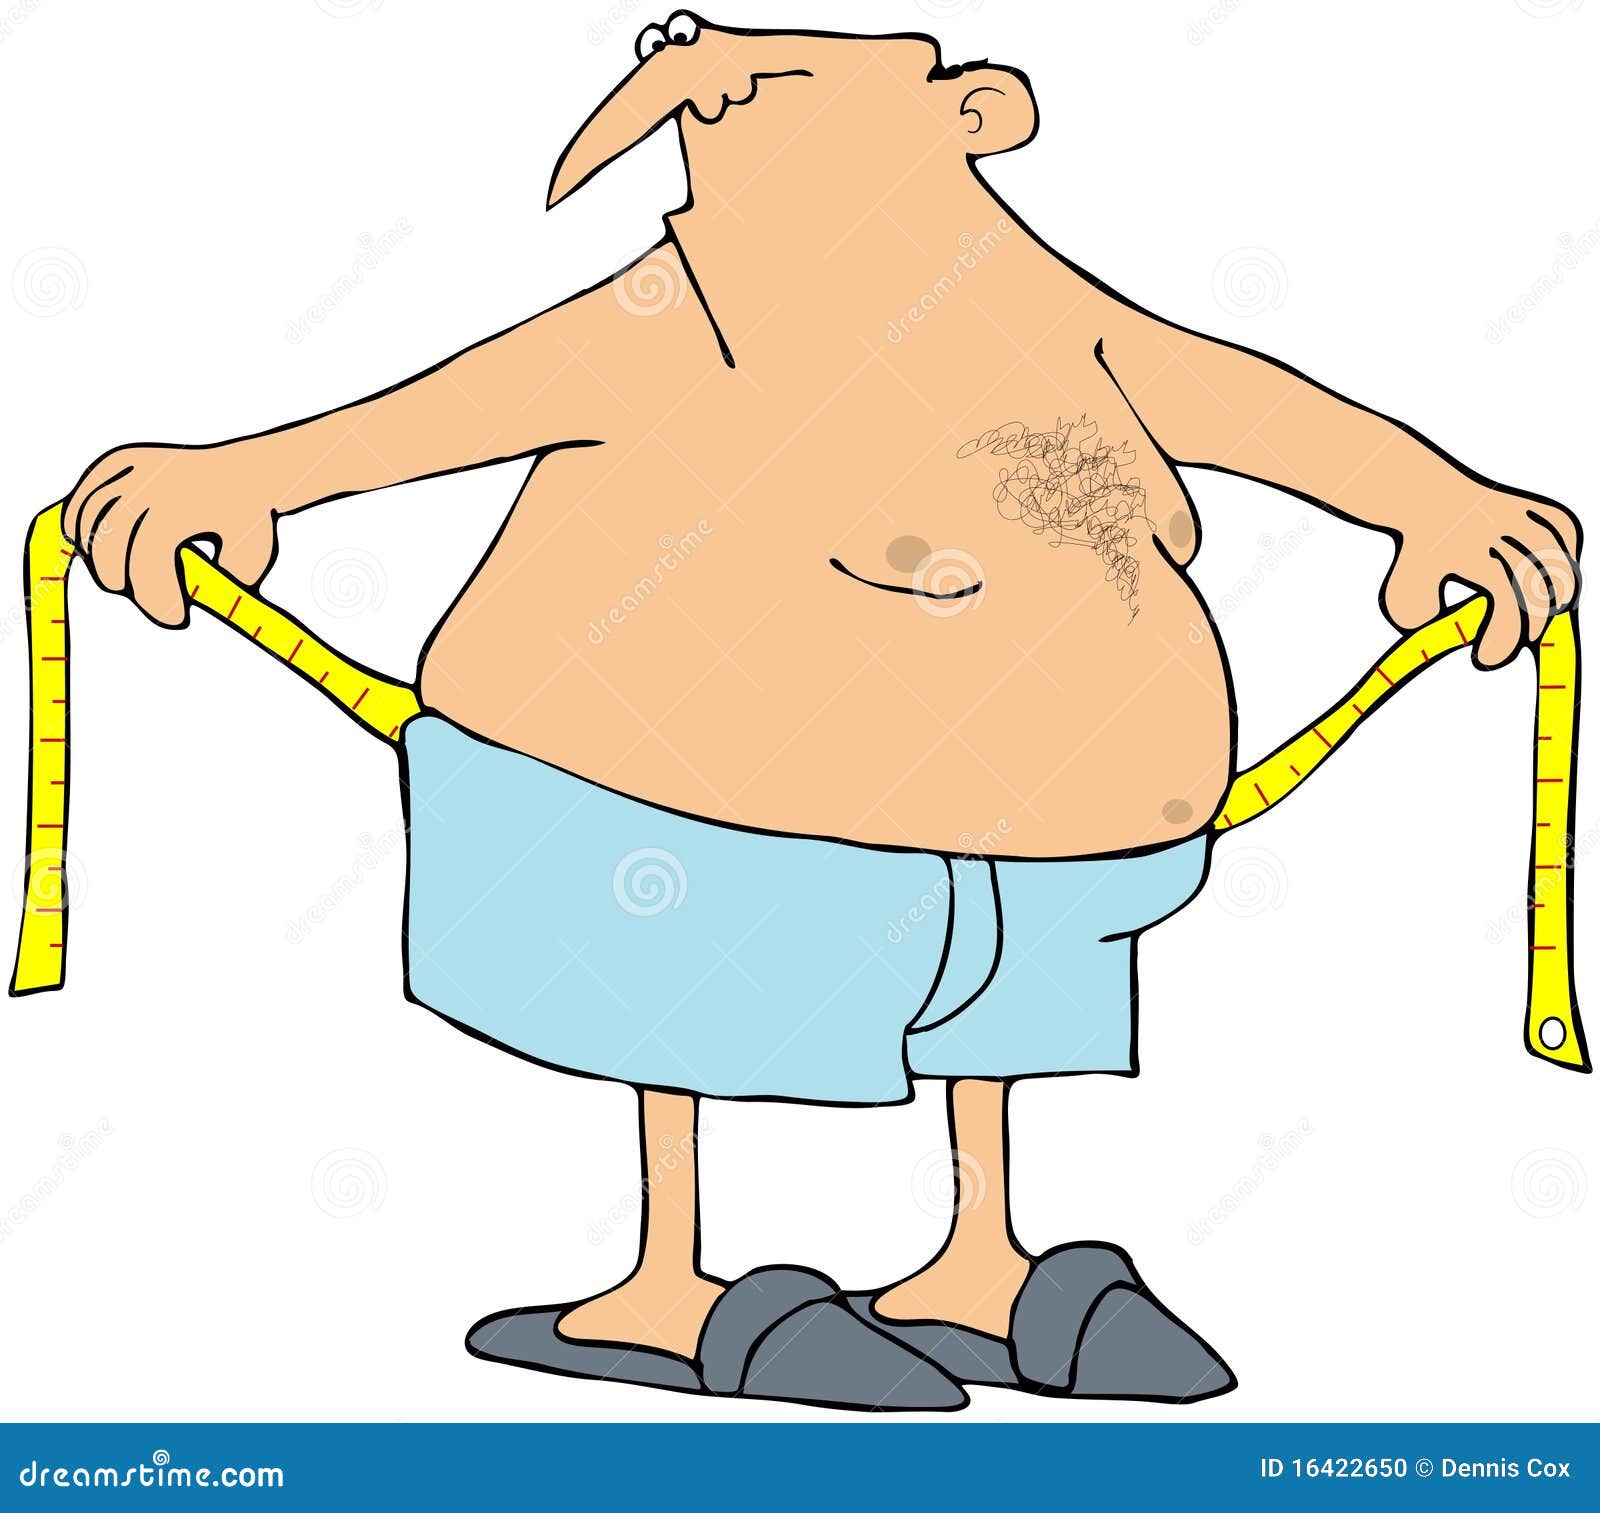 man measuring his waist